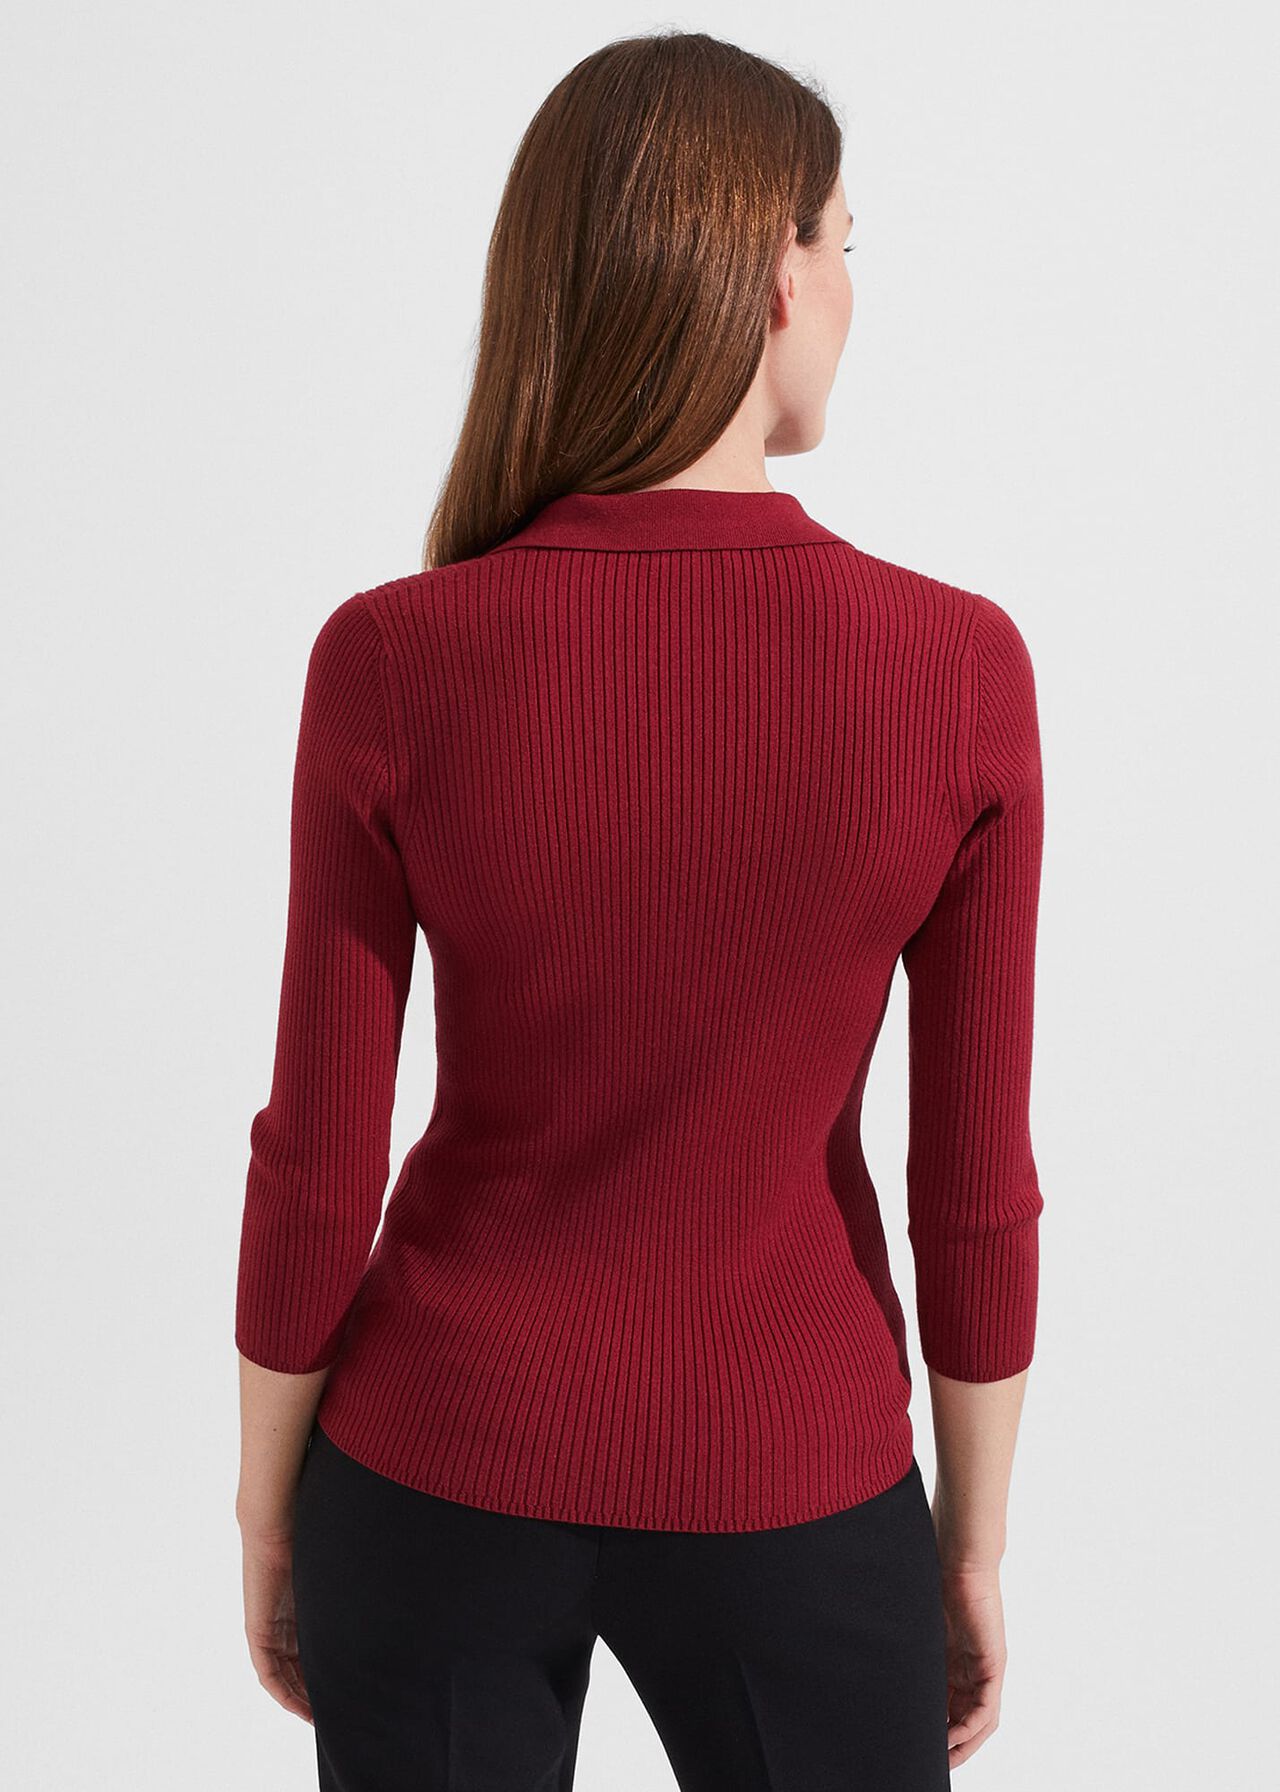 Edie Knitted Shirt, Rhubarb Red, hi-res